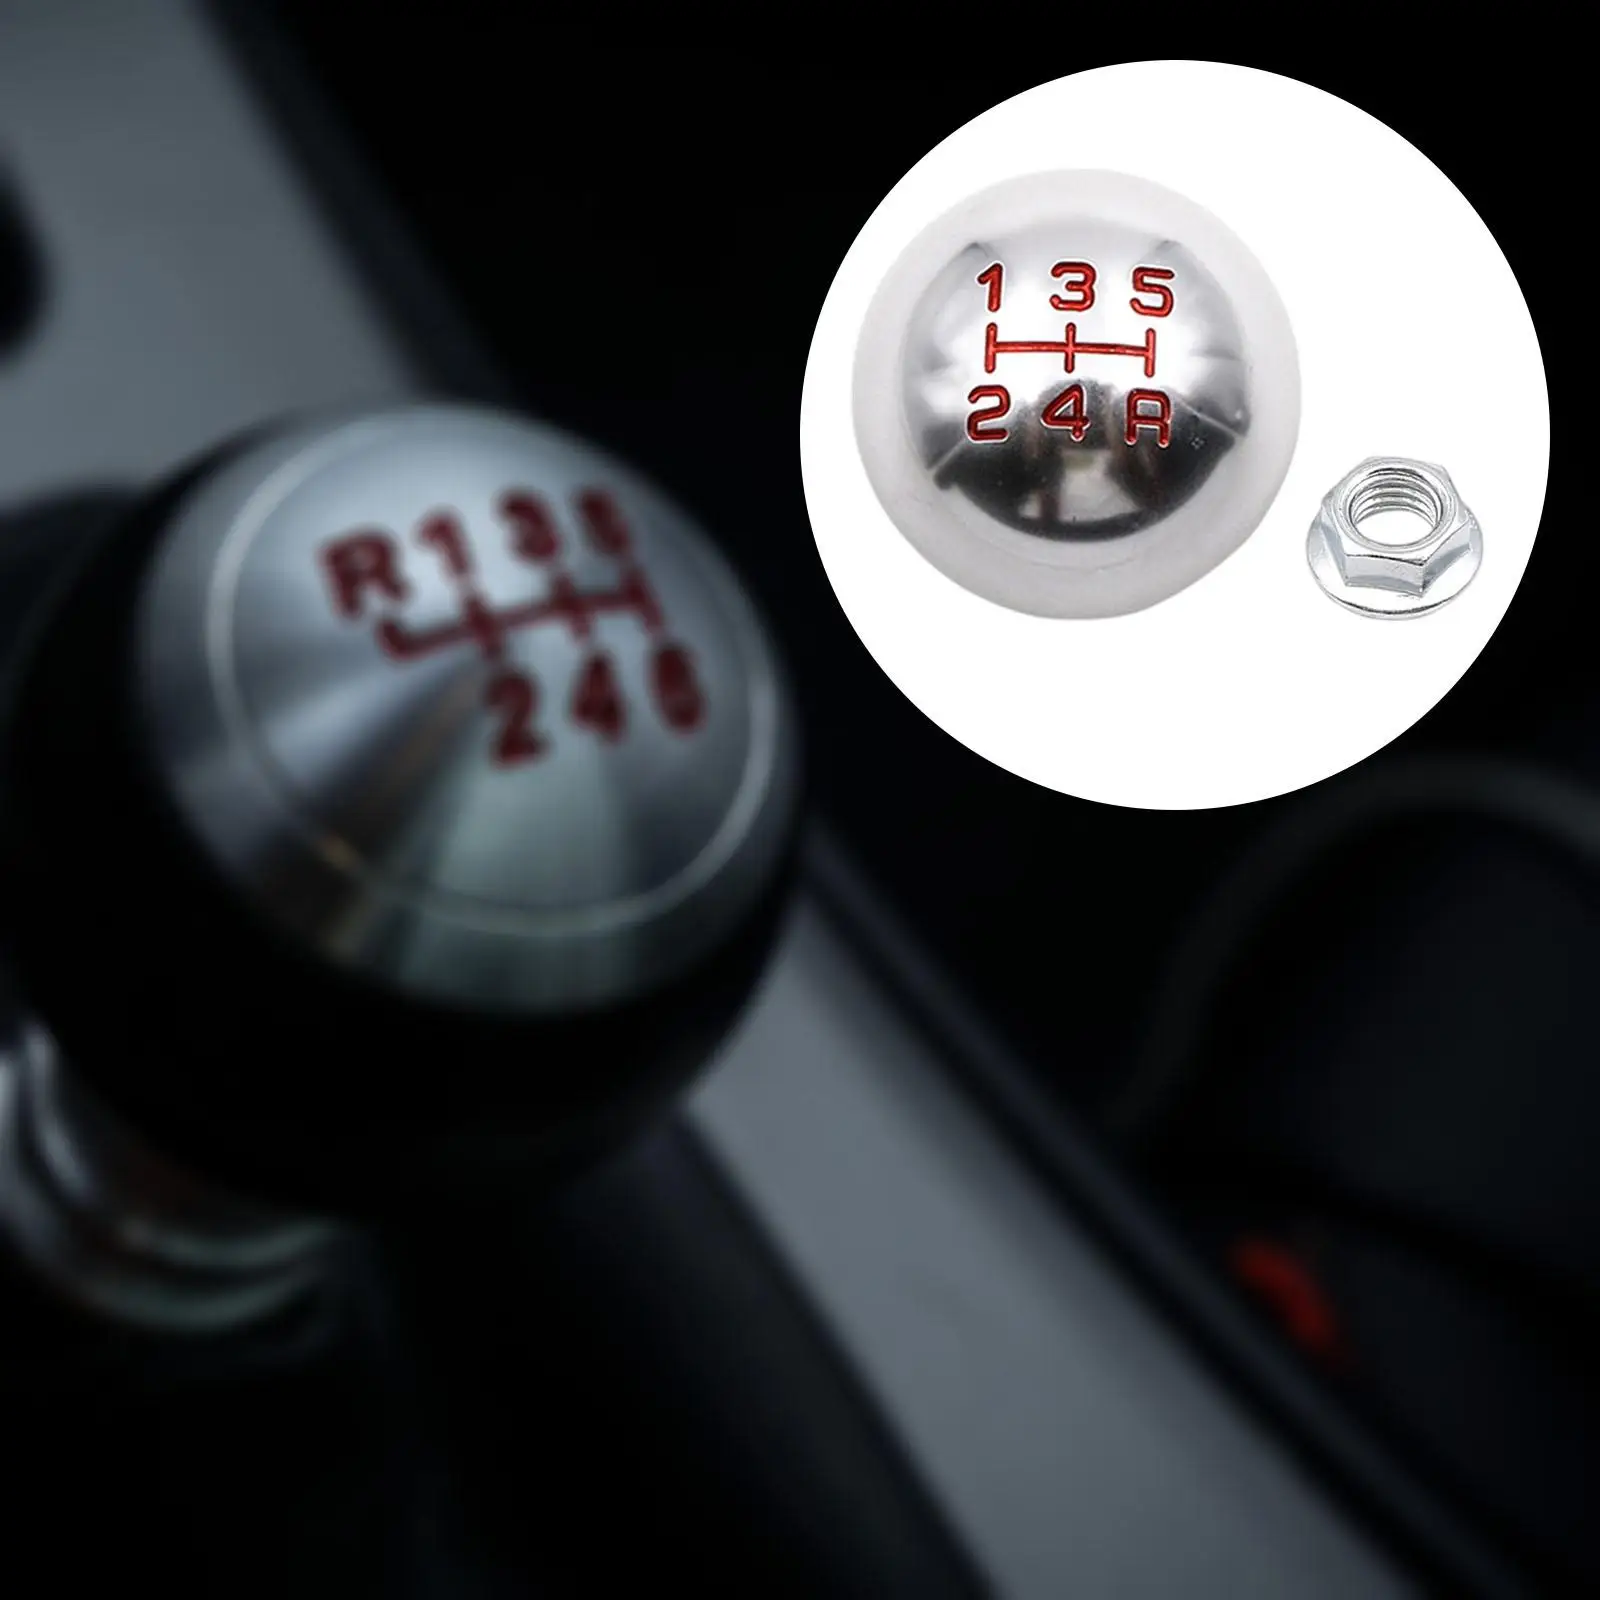 Aluminum Alloy Round Ball Gear Shift Knob, Type R M10 x 1.5 Nuts Manual Shifter for Honda Acura Civic Auto Parts